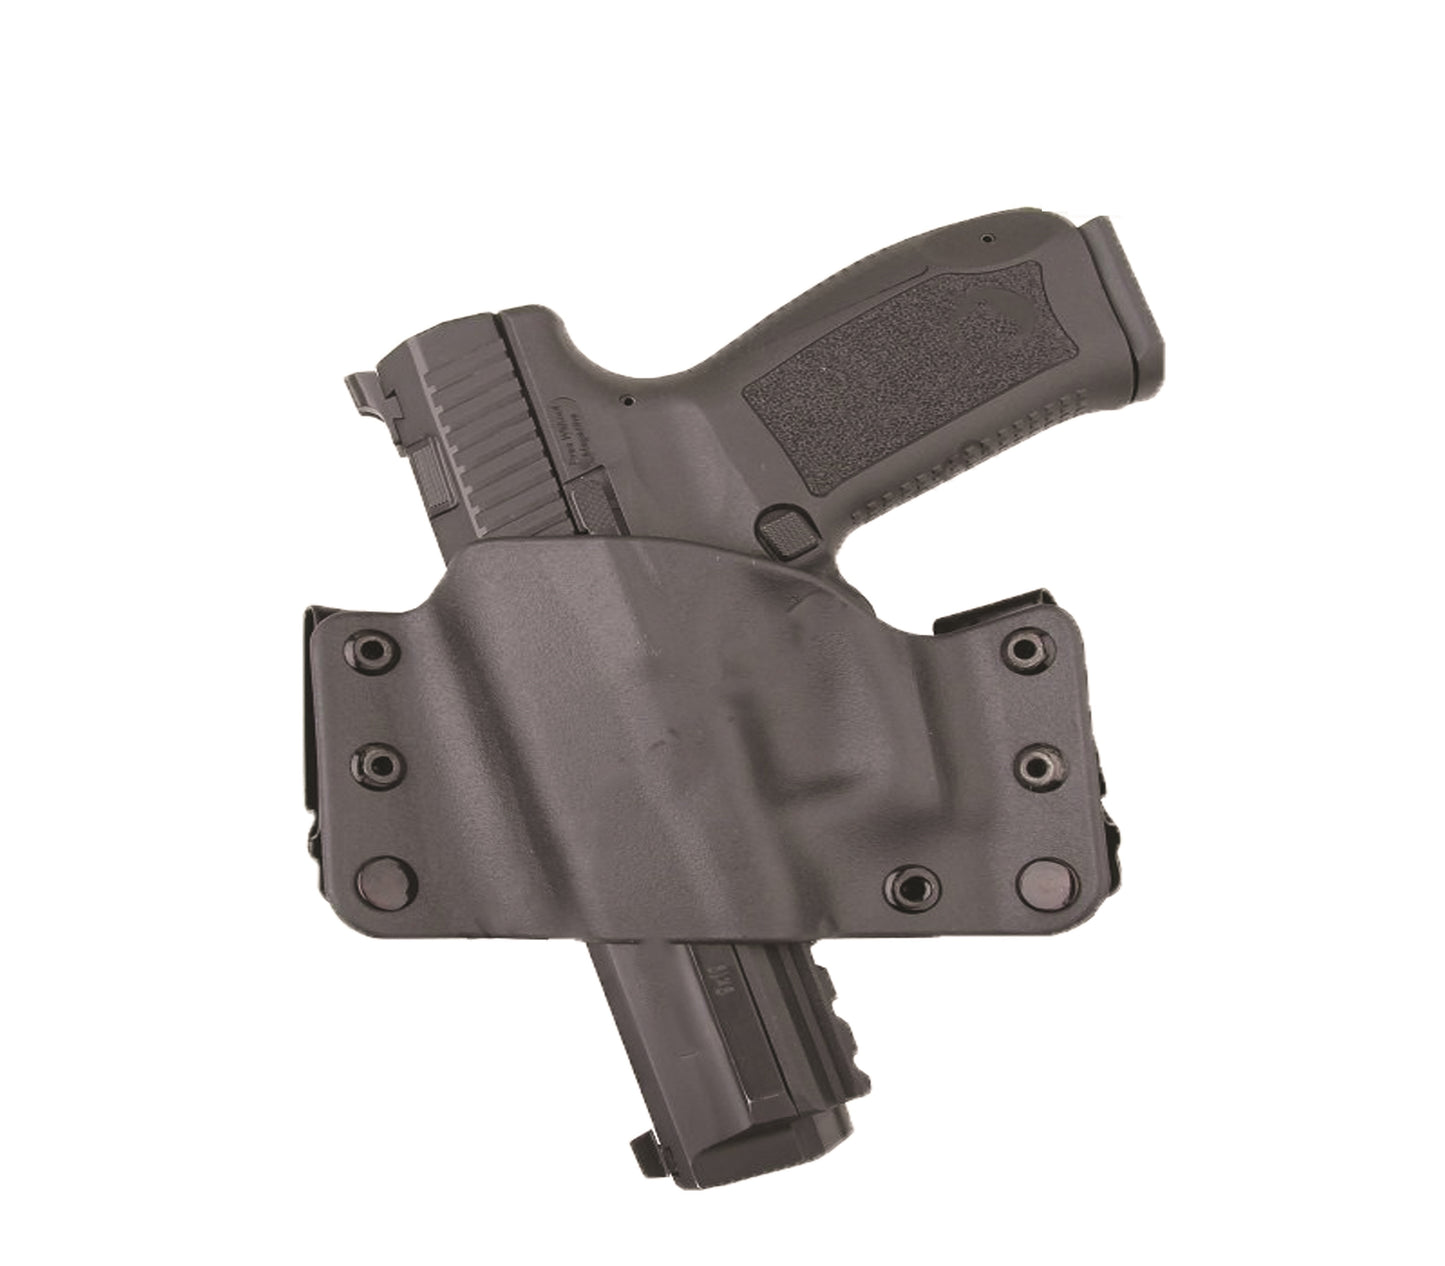 Canik TP9 Series IWB Polymer Gun Holster Right Hand W/Quick Belt Clips